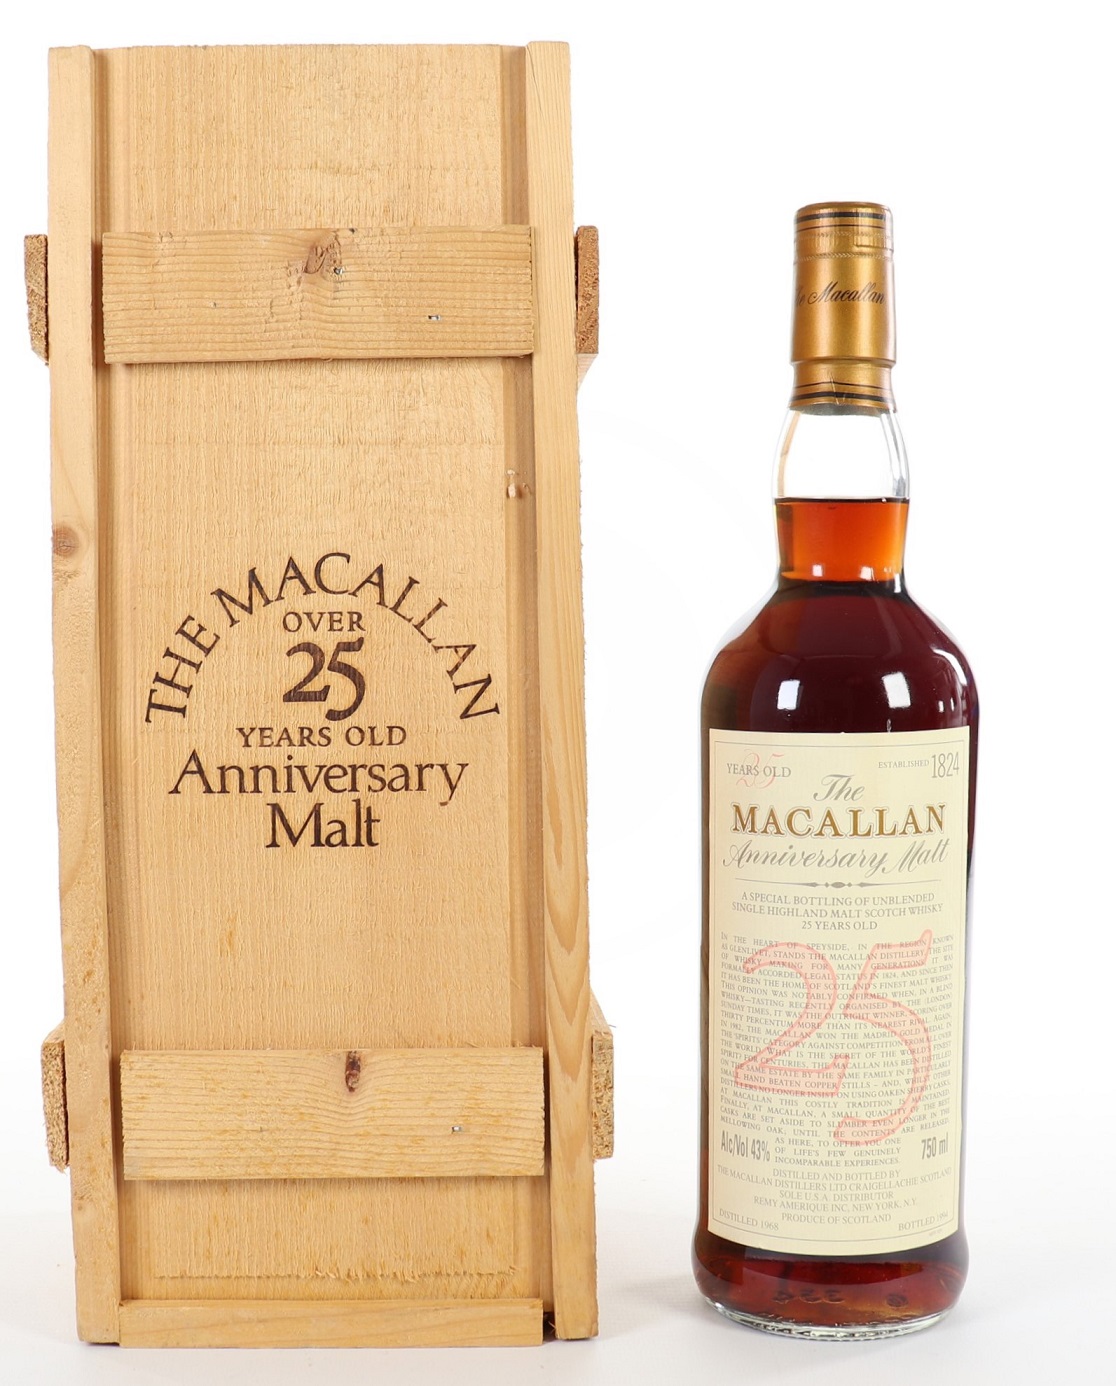 Macallan マッカラン25年 Anniversary Malt 1968 米国正規代理店輸入品